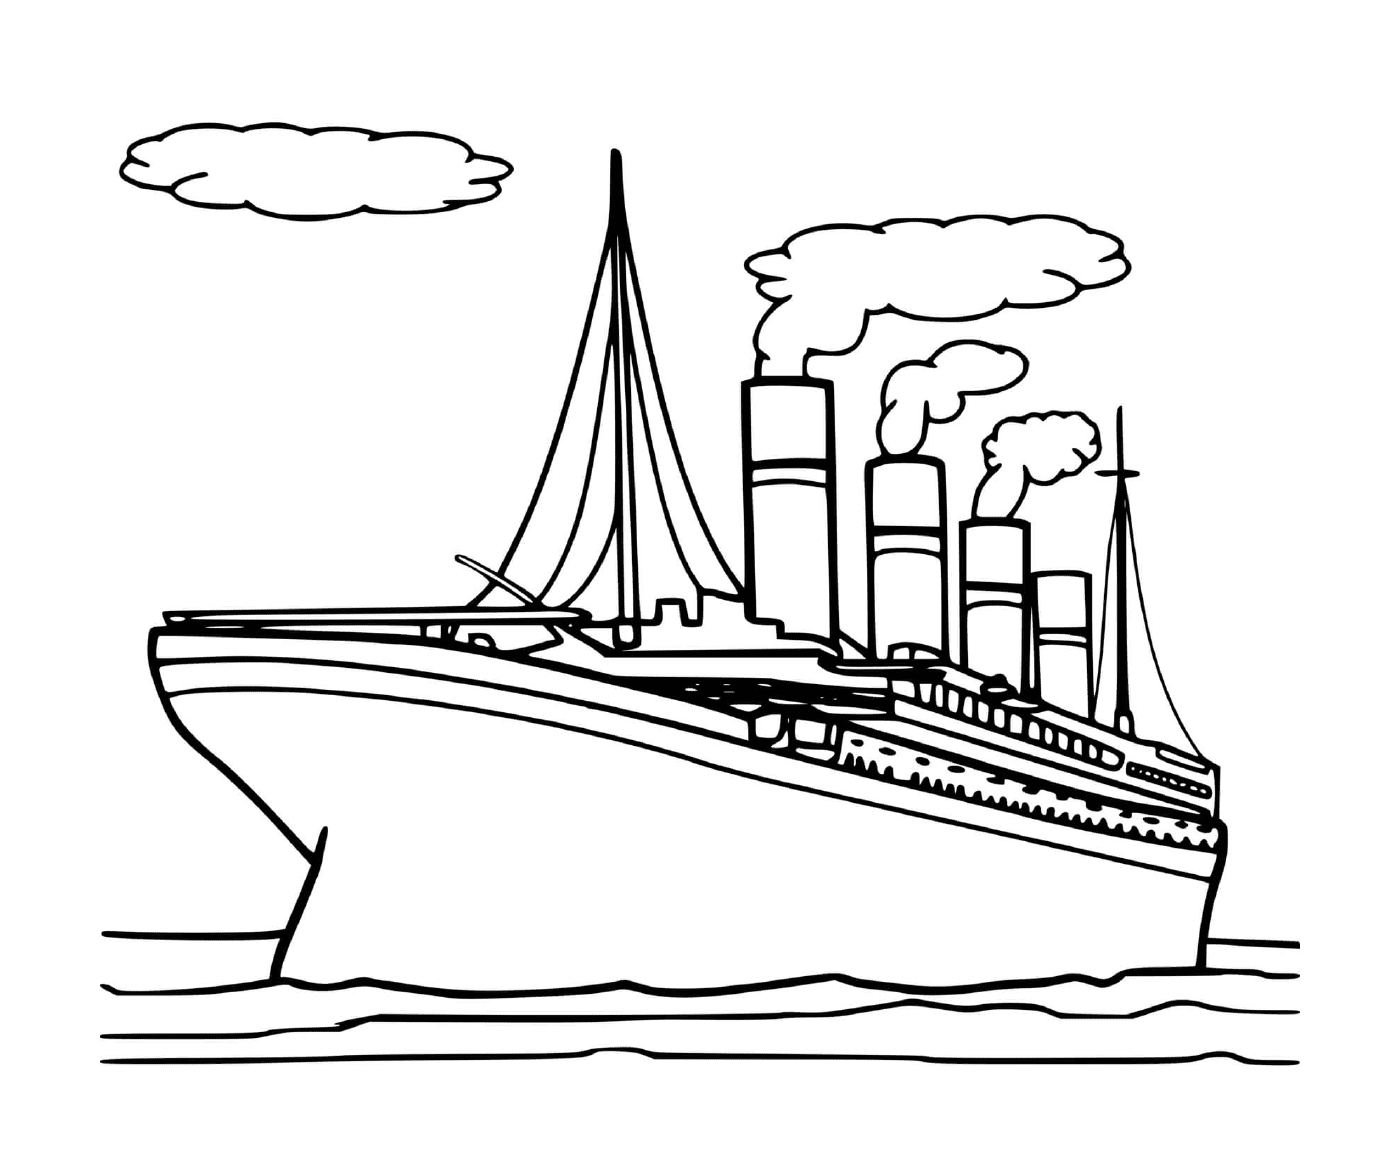  The Titanic boat 